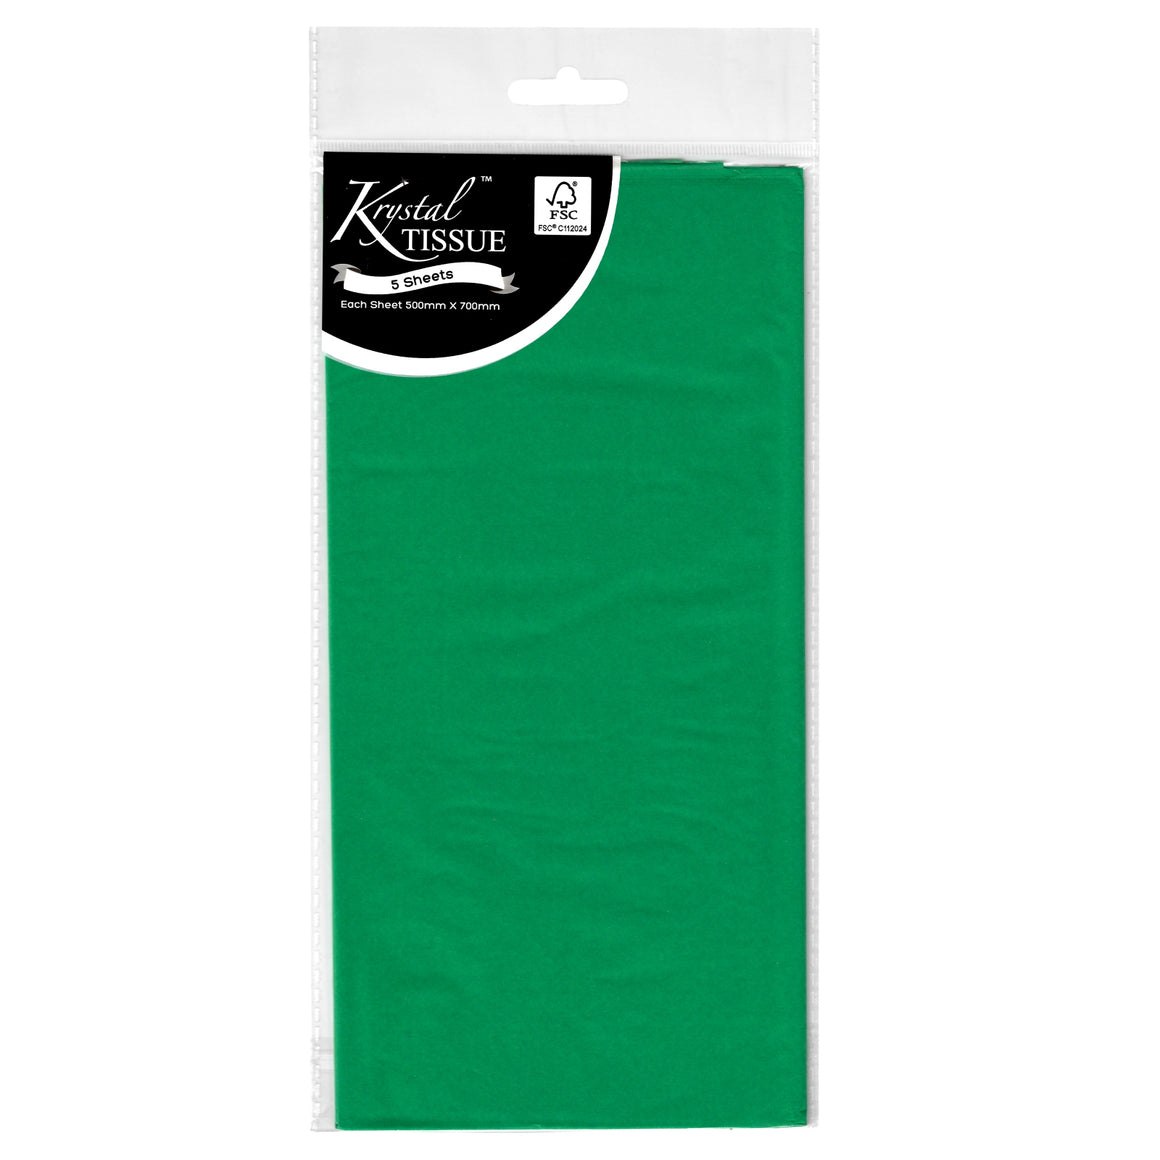 Krystal Tissue Paper - Pack of 5 sheets, Green